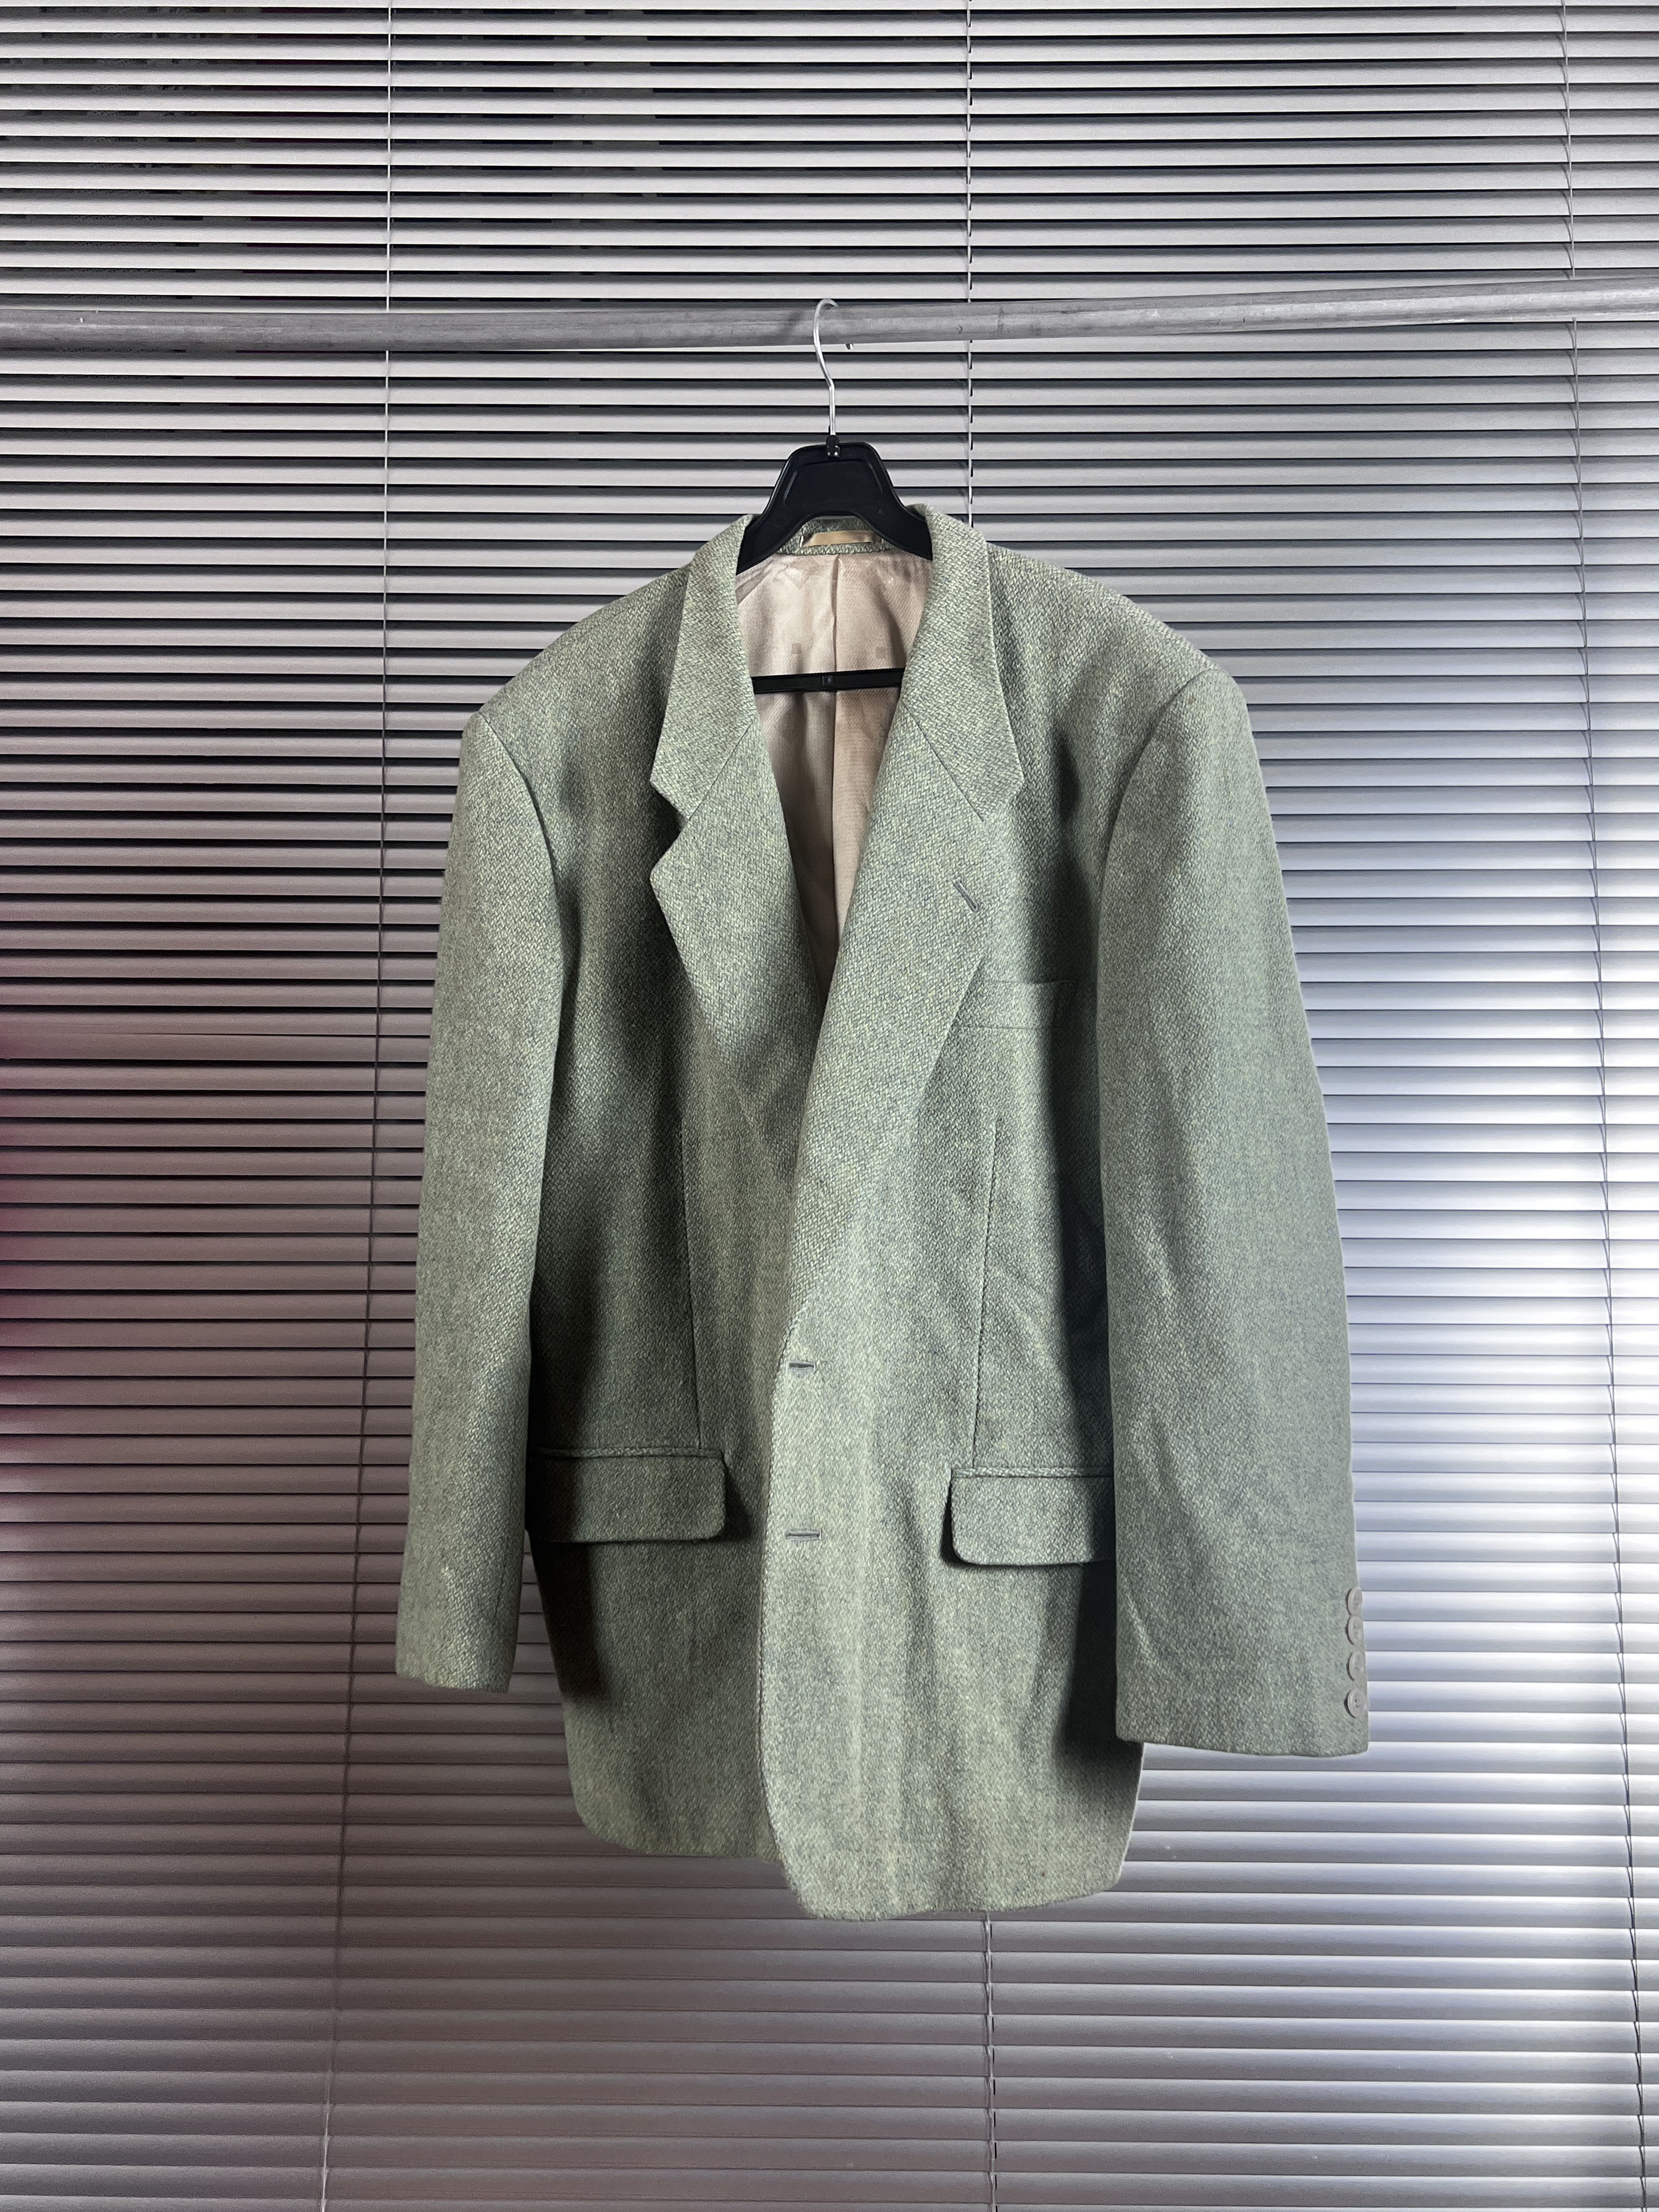 Christian Dior wool jacket